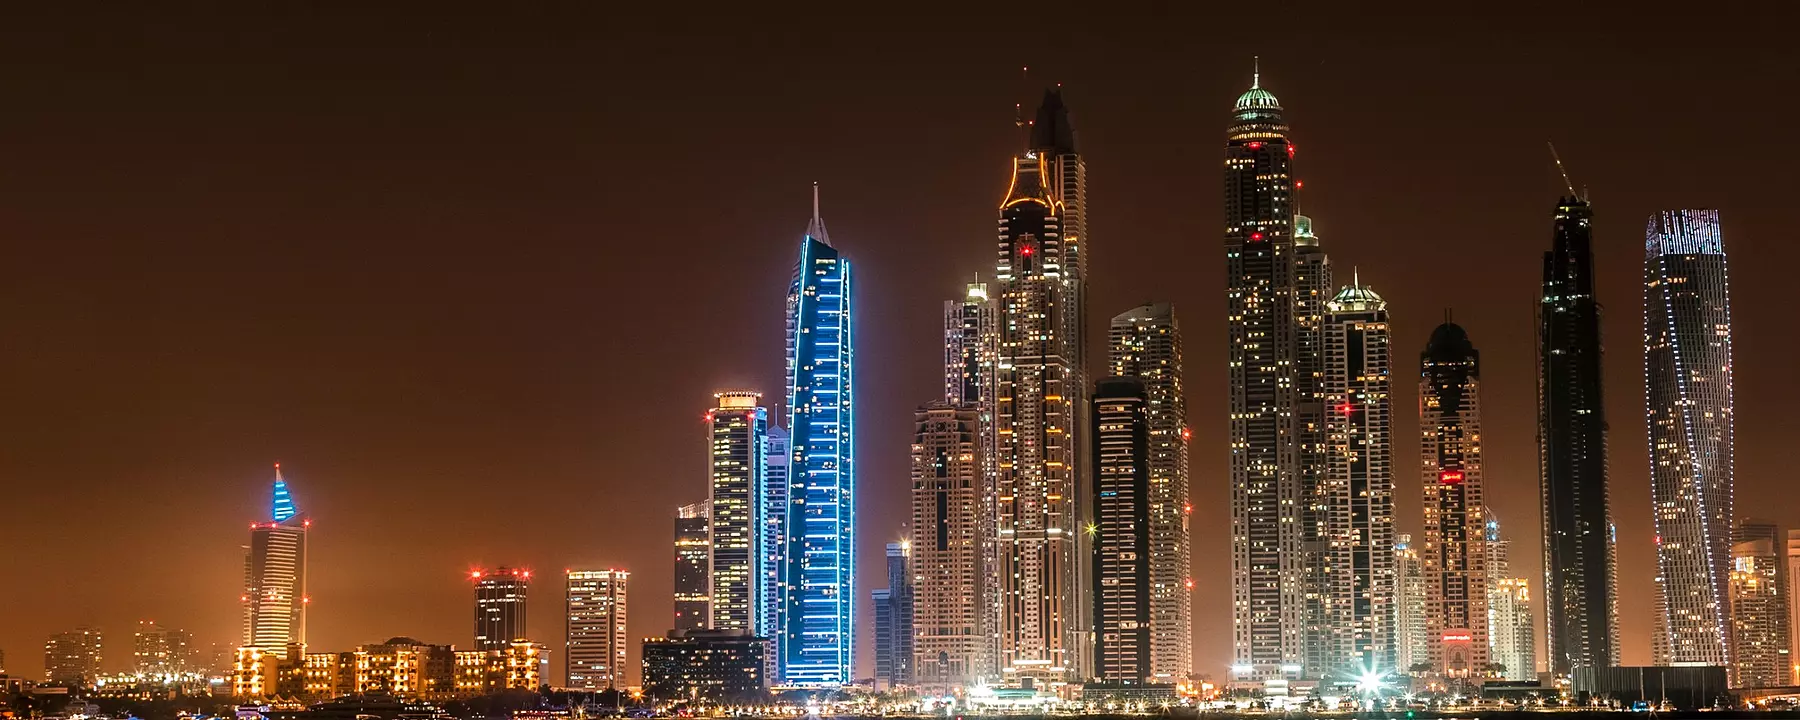 The skyline of Dubai